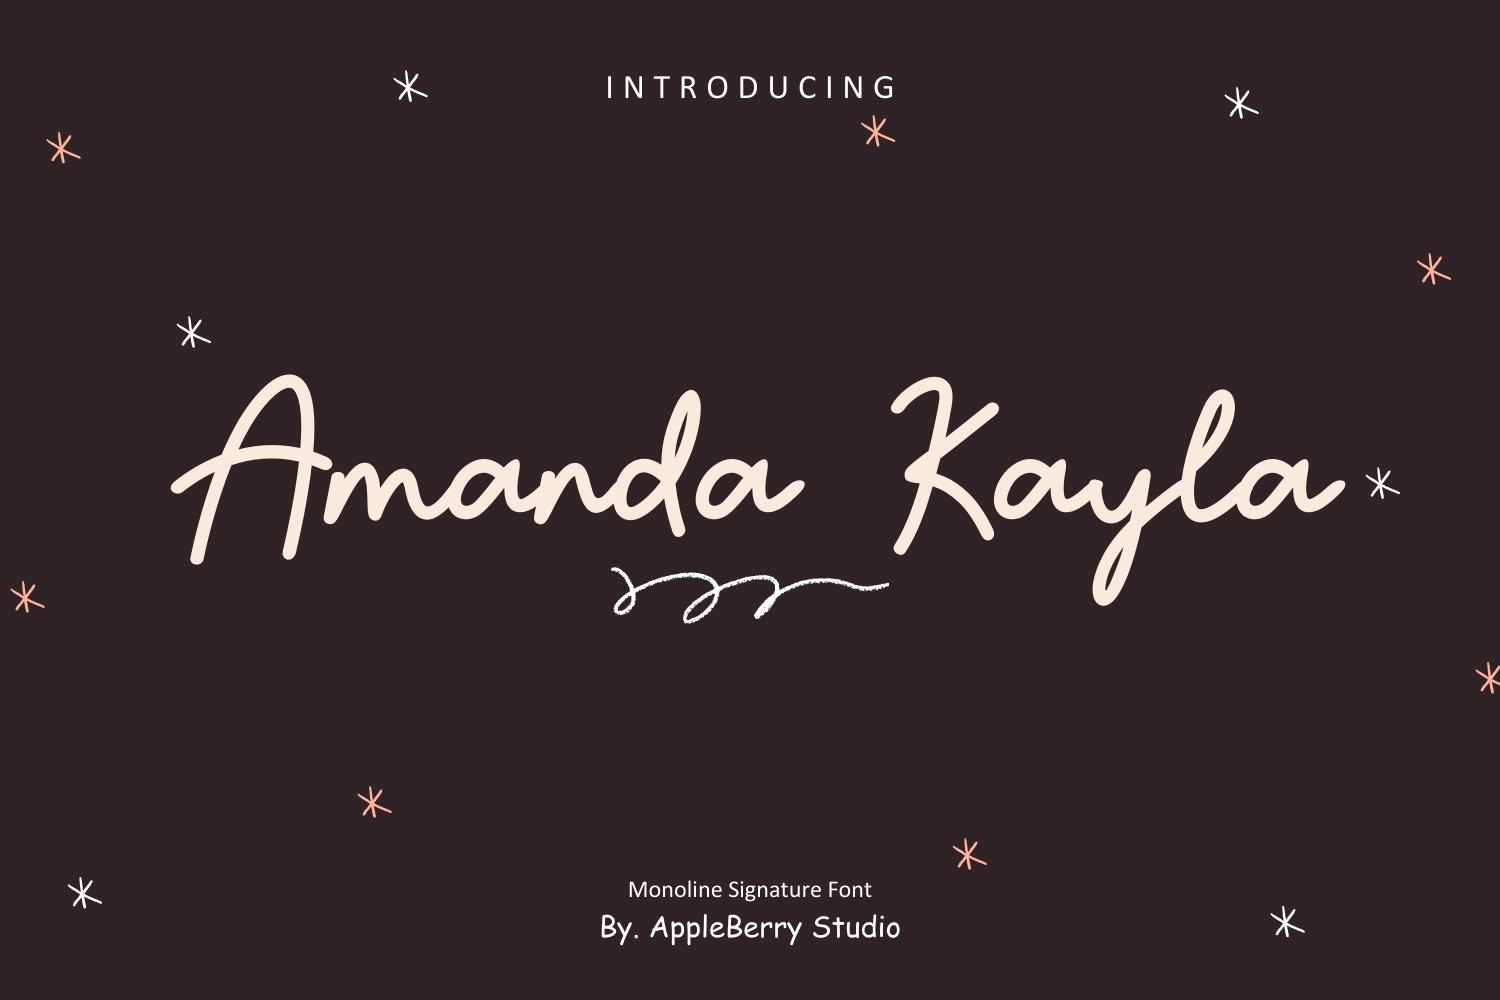 Amanda Kayla Font